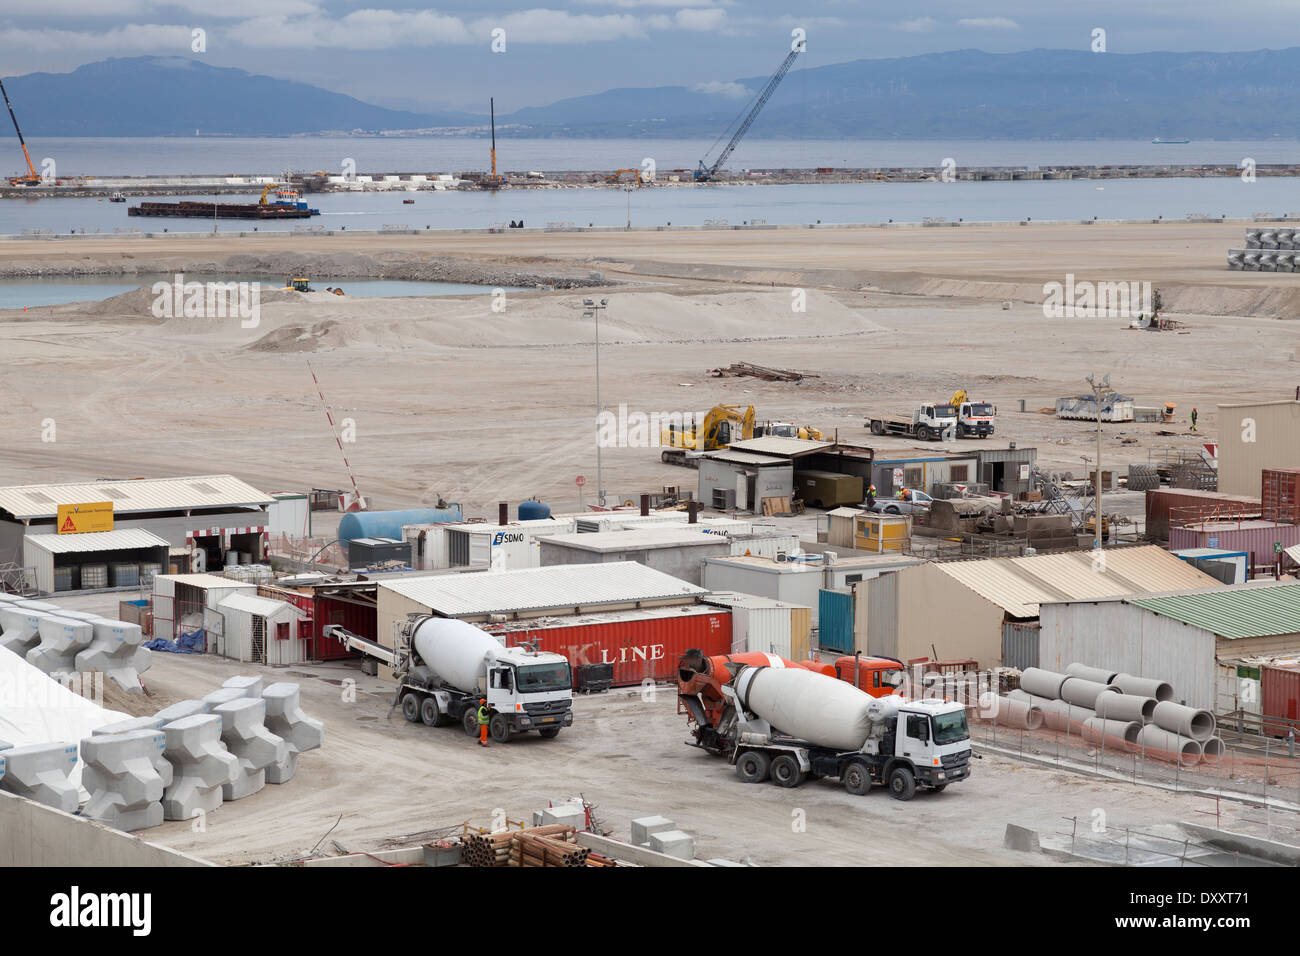 New Tanger Med 2 port area under construction Stock Photo